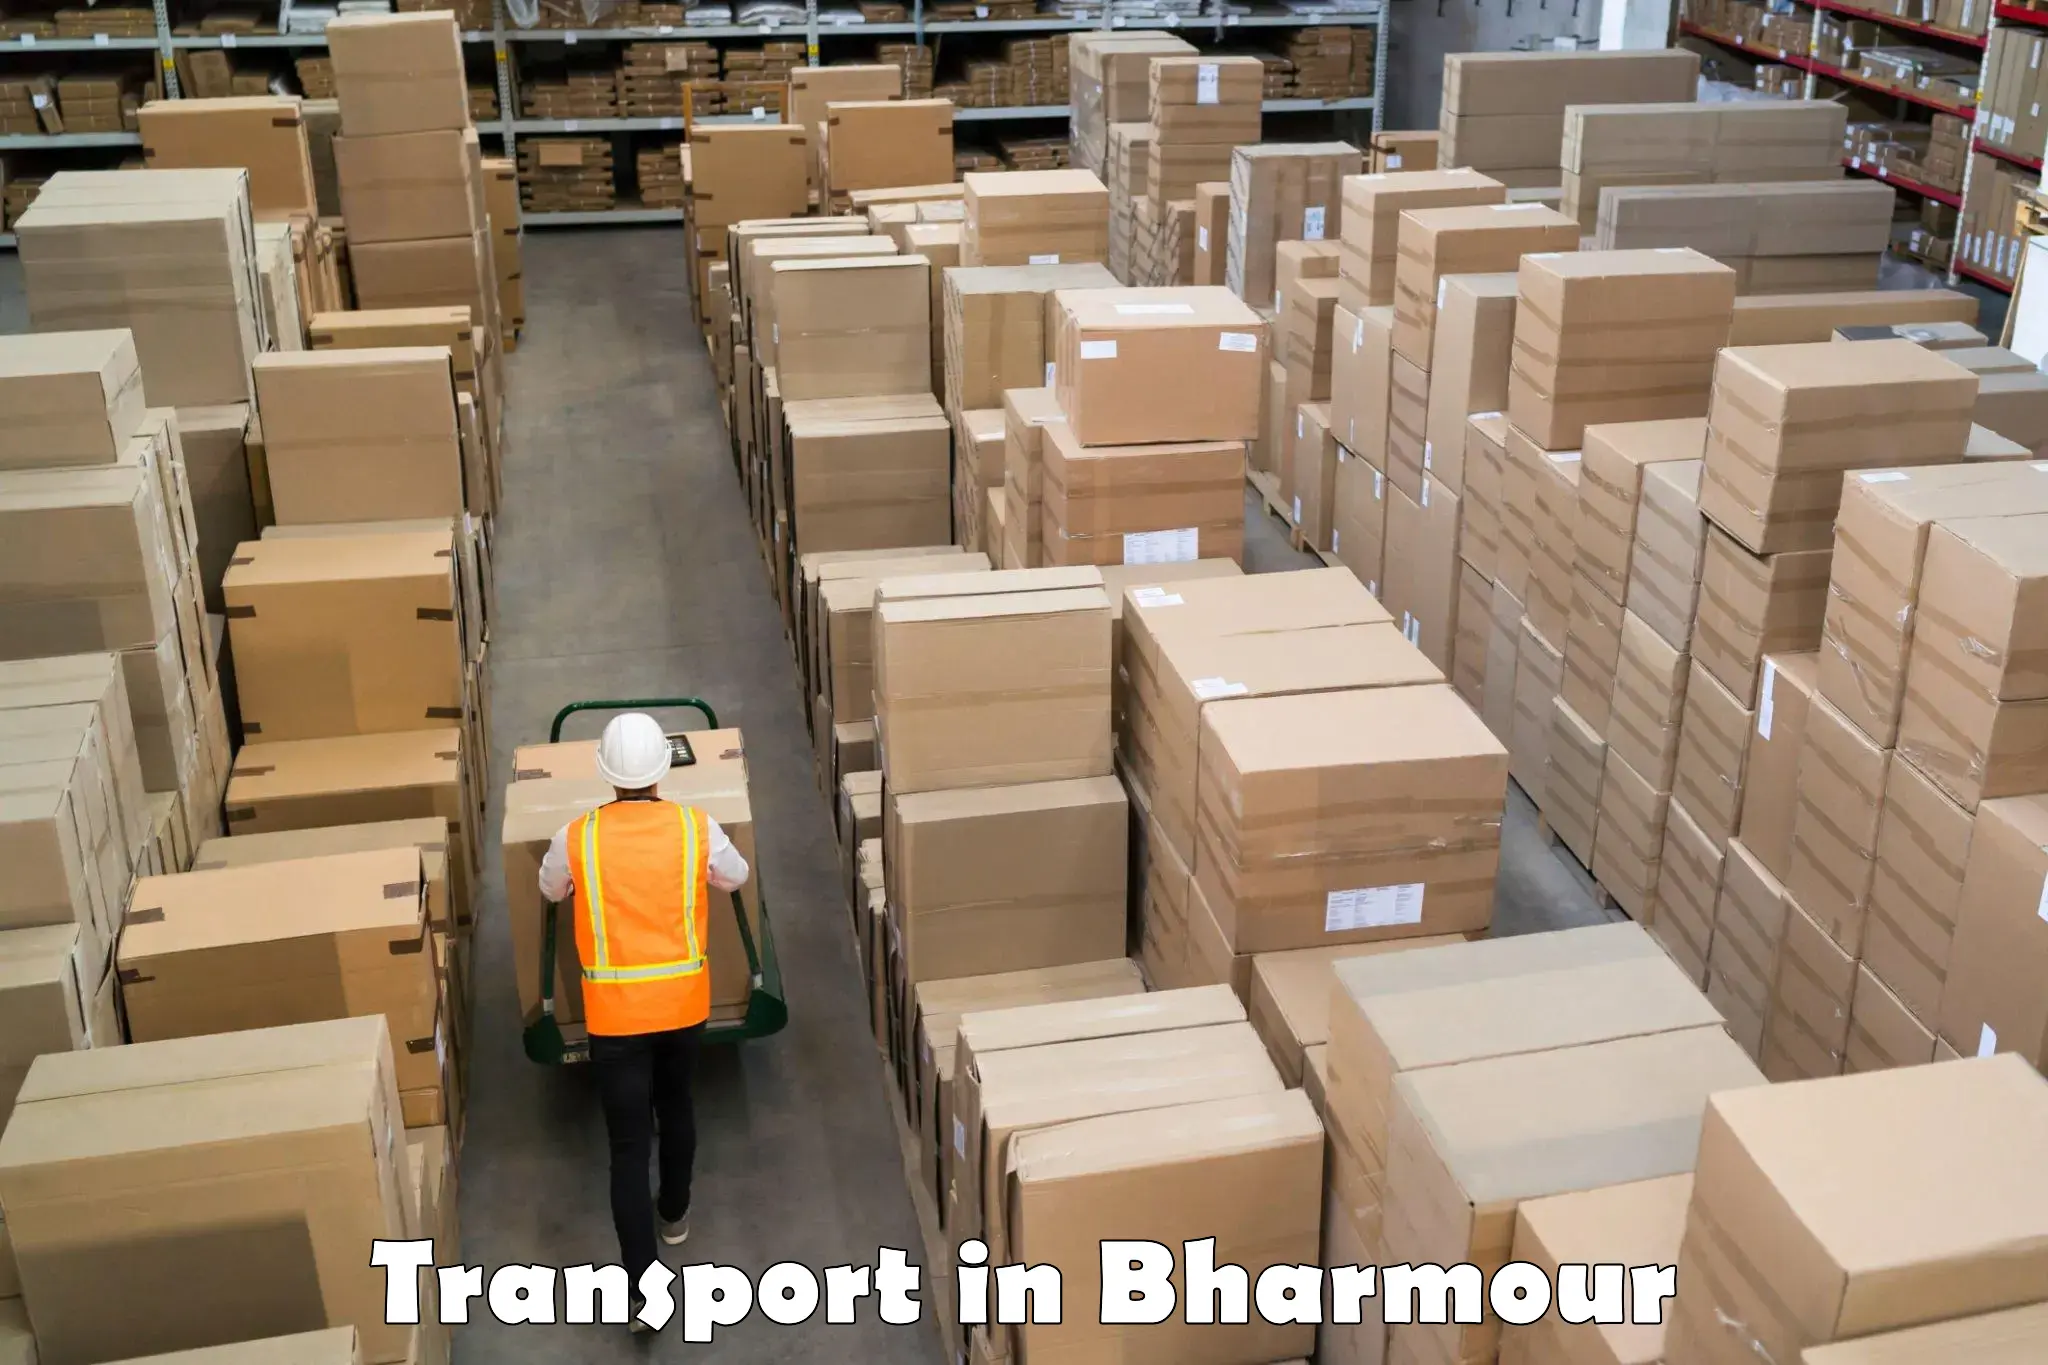 Interstate goods transport in Bharmour